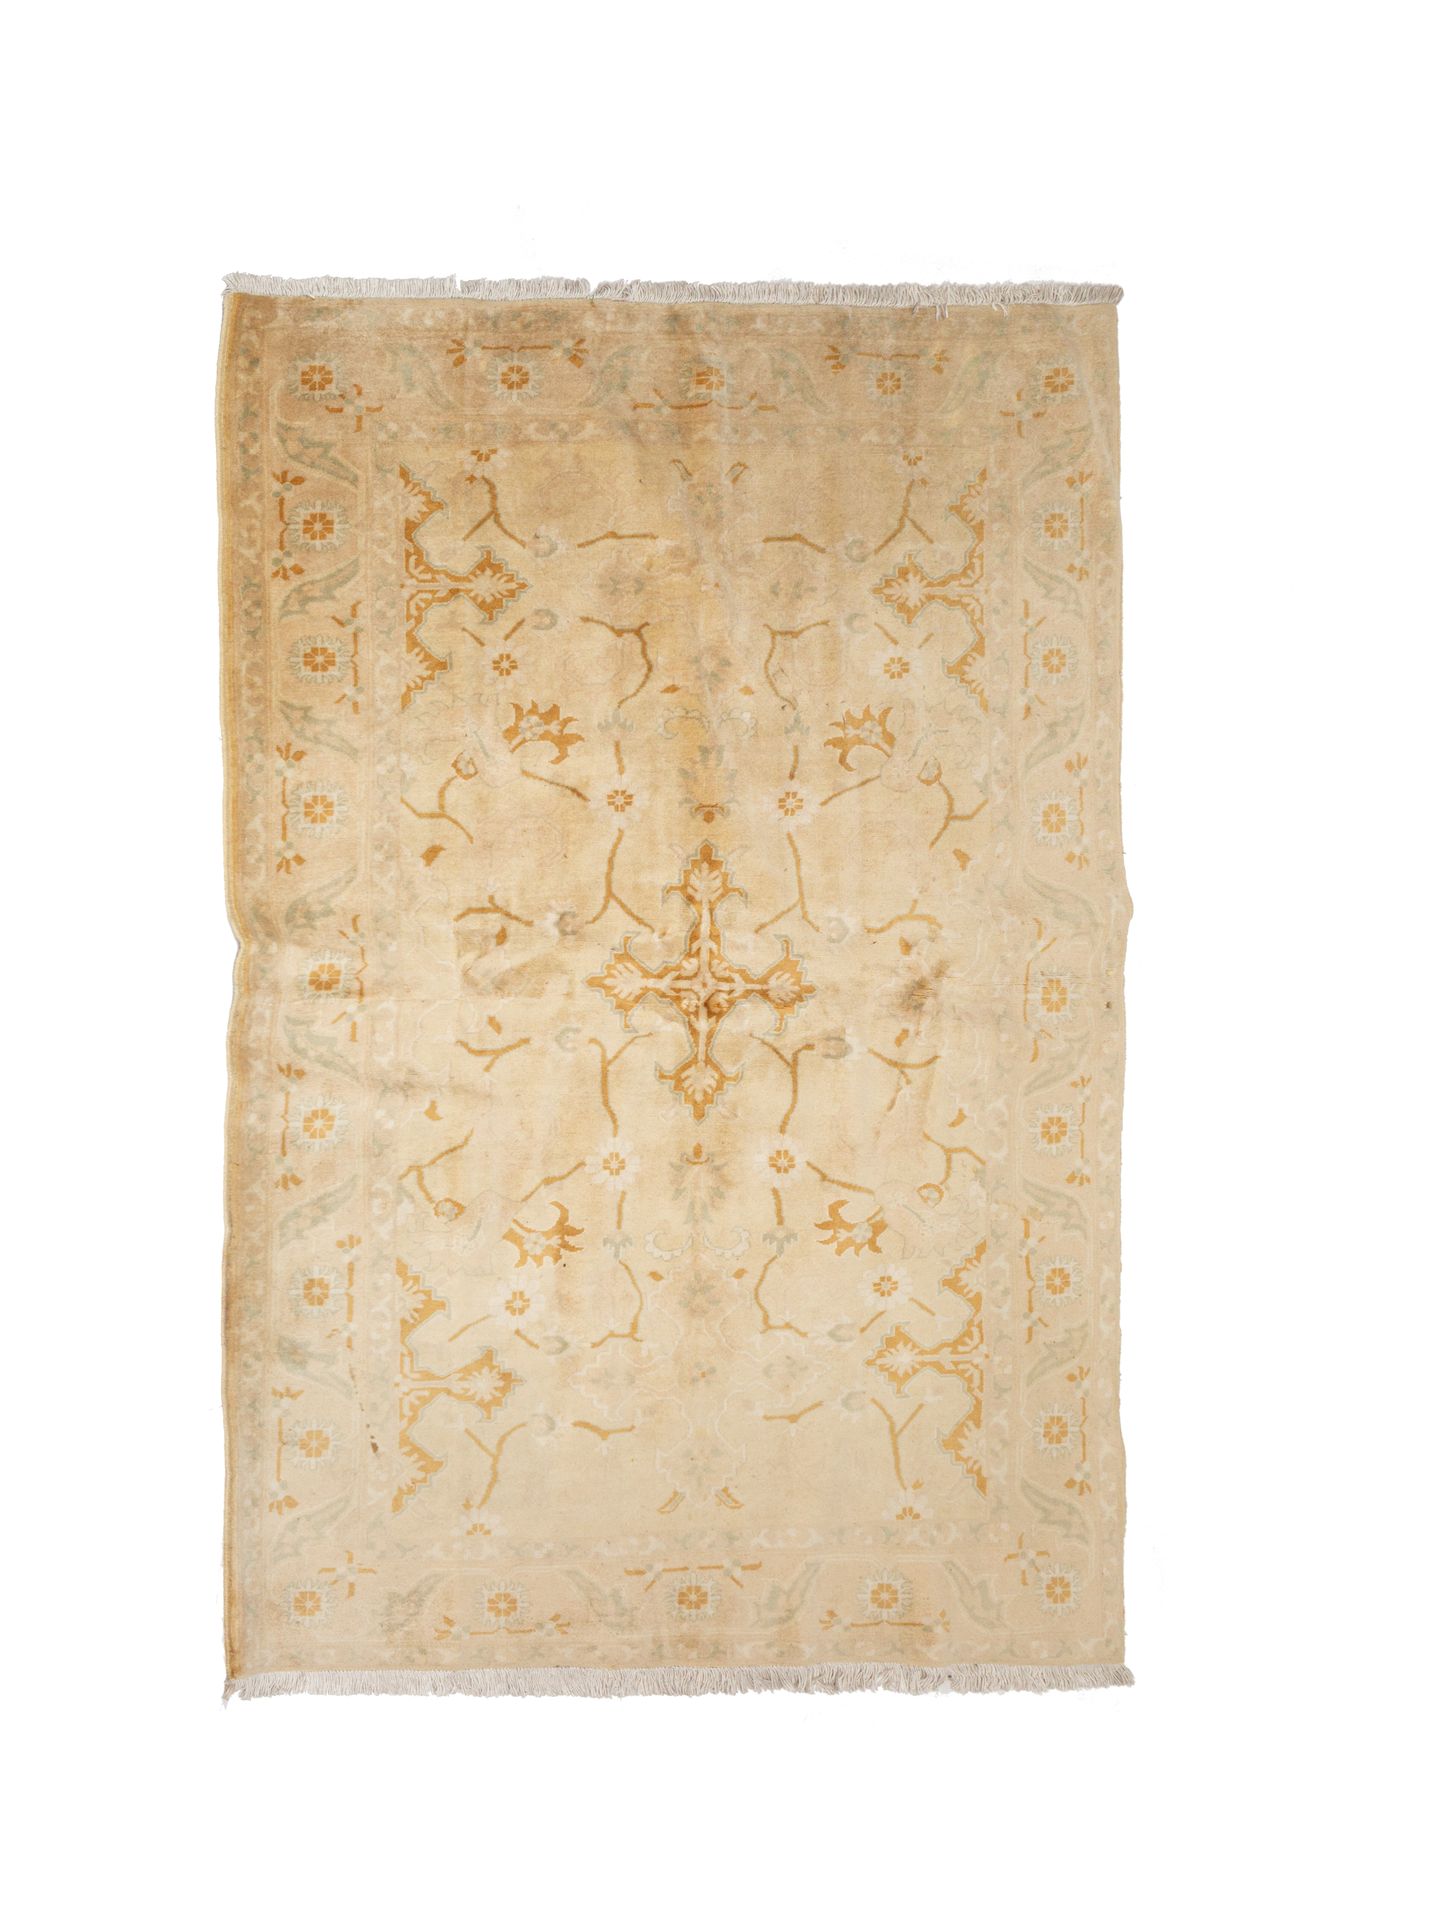 Null 印度阿格拉传统的乔比地毯，约1980年

尺寸：220 x 170 cm

技术特点 : 棉质底面的丝质羊毛绒布

总体状况良好，无磨损或污渍

象牙&hellip;